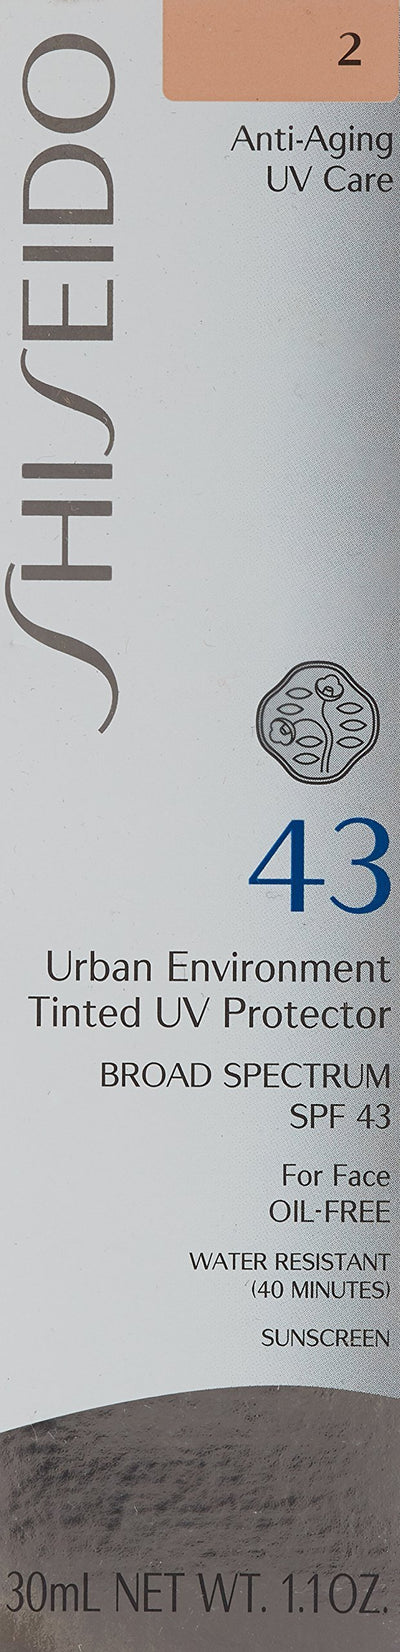 Shiseido Urban Environment Tinted UV SPF 43 Protector Broad Spectrum for Face, No. 2, 1.10 Ounce - Glumech